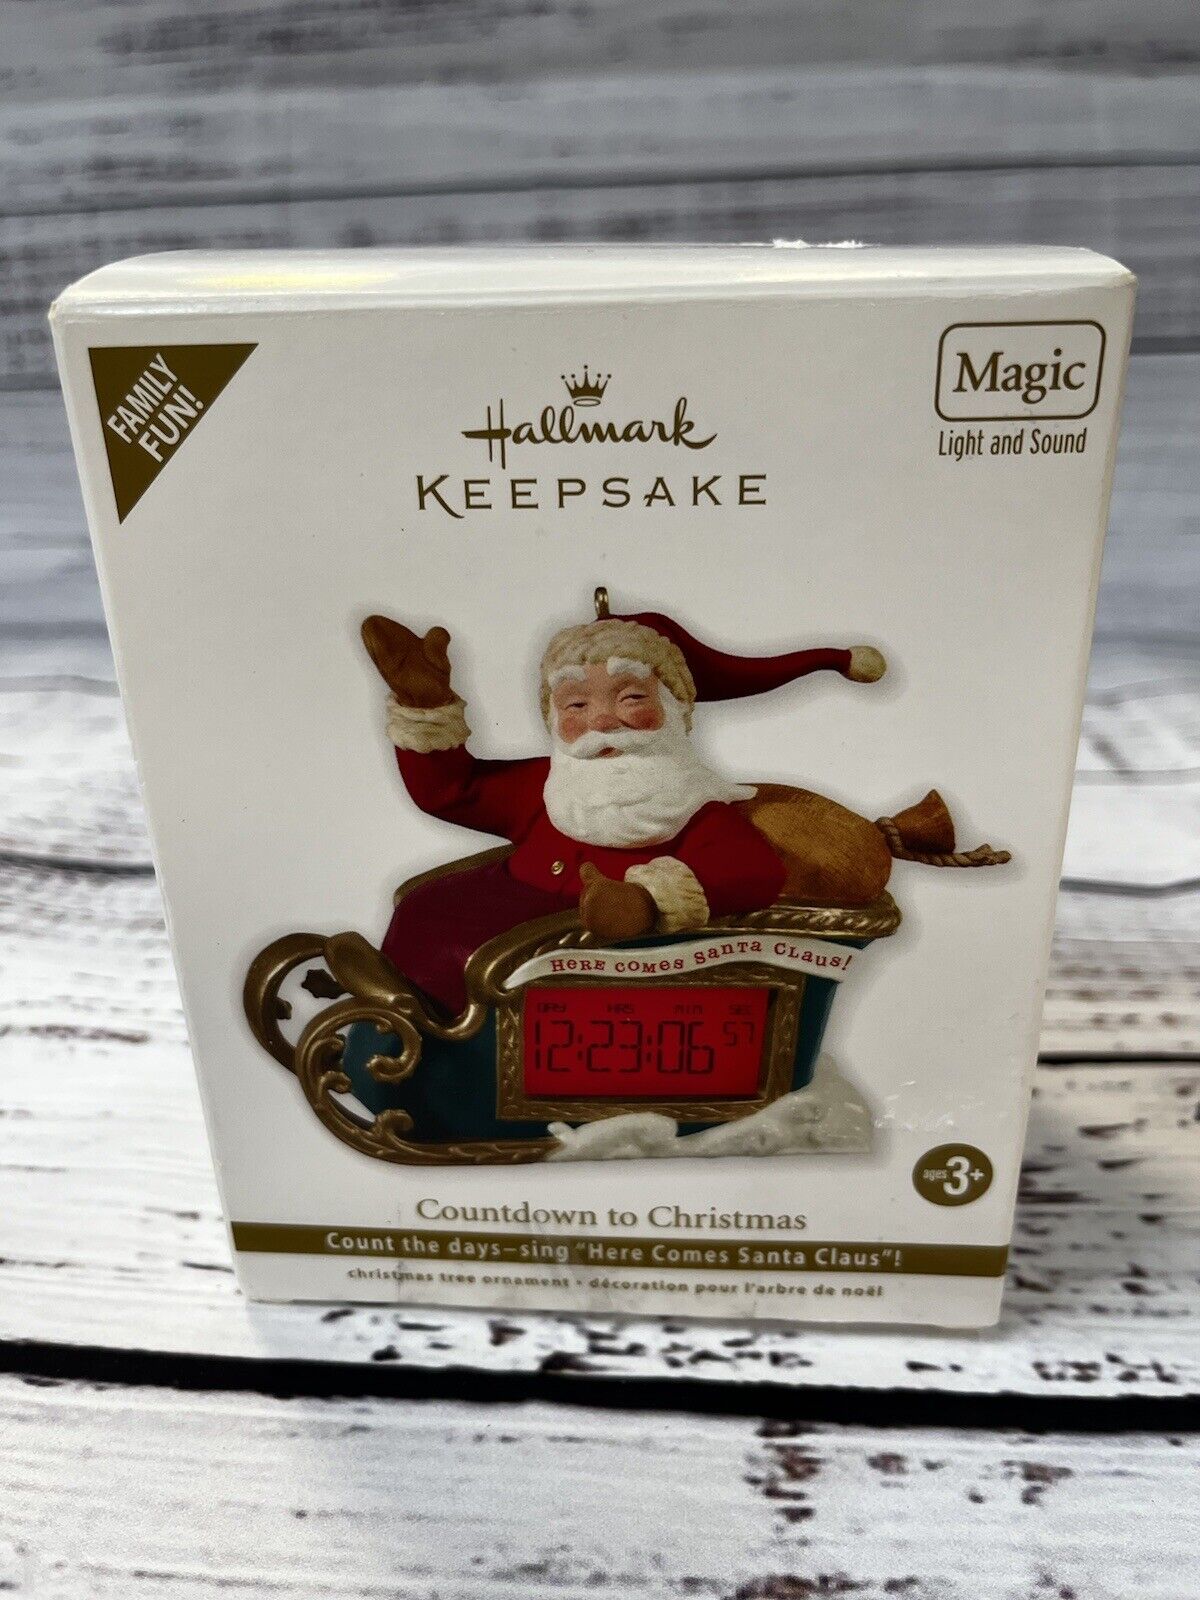 2012 Hallmark Keepsake Ornament Countdown To Christmas Magic Light & Sound Santa